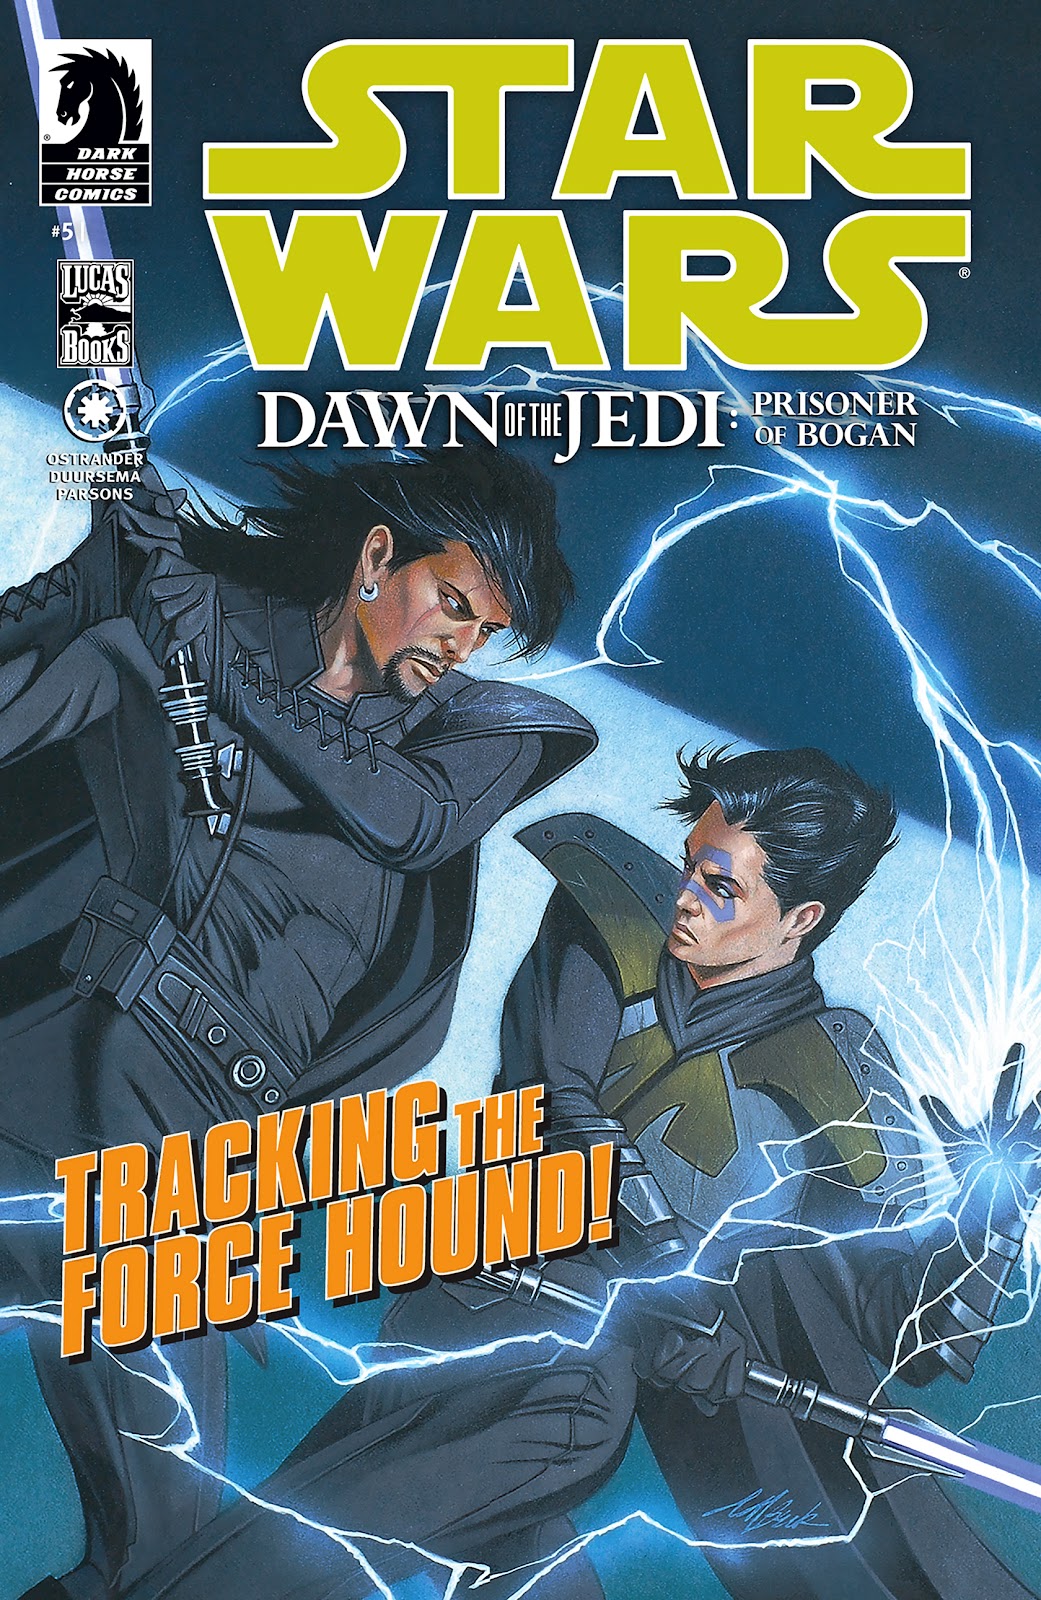 Star Wars: Dawn of the Jedi - Prisoner of Bogan #5 - Read Star Wars: Dawn  of the Jedi - Prisoner of Bogan Issue #5 Online